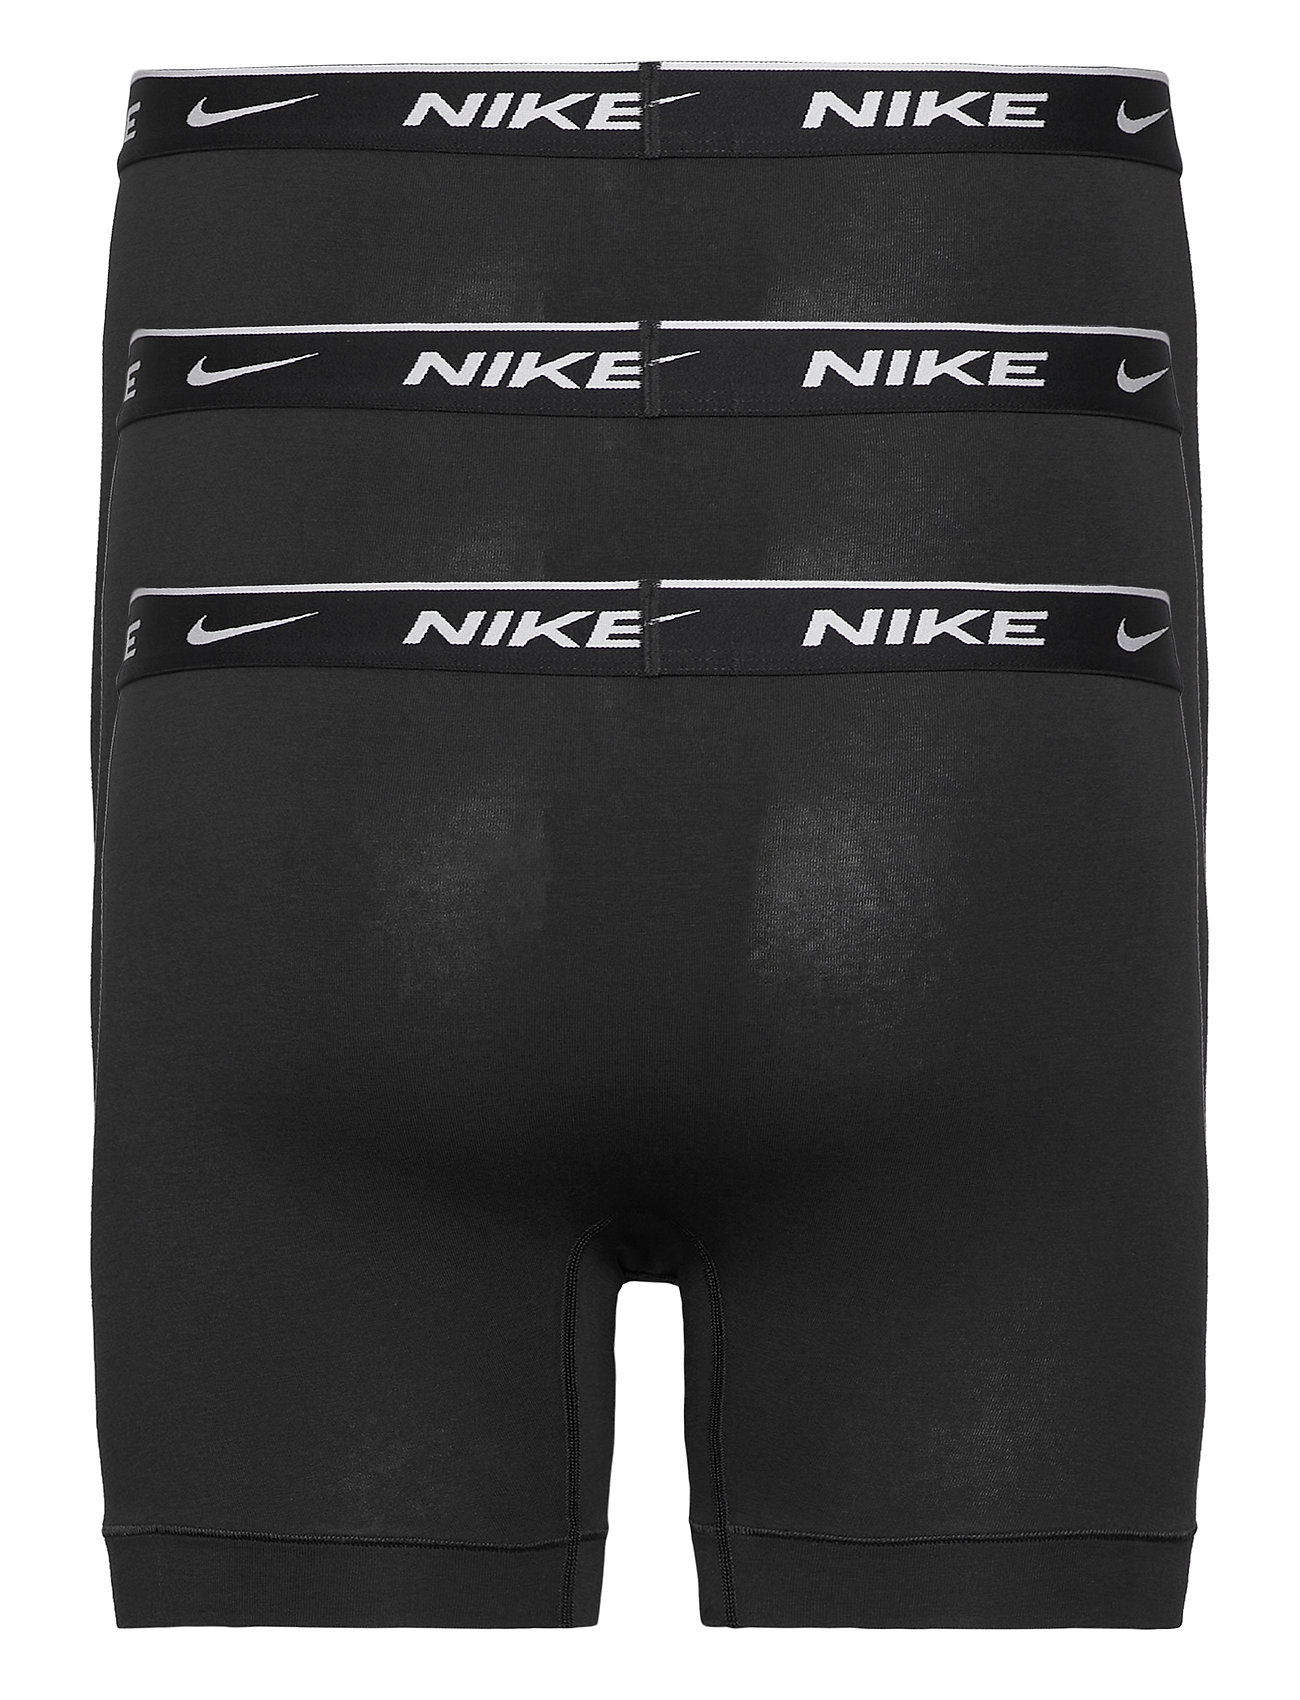 NIKE Underwear - BOXER BRIEF 3PK - boxer briefs - black/black/black - 1